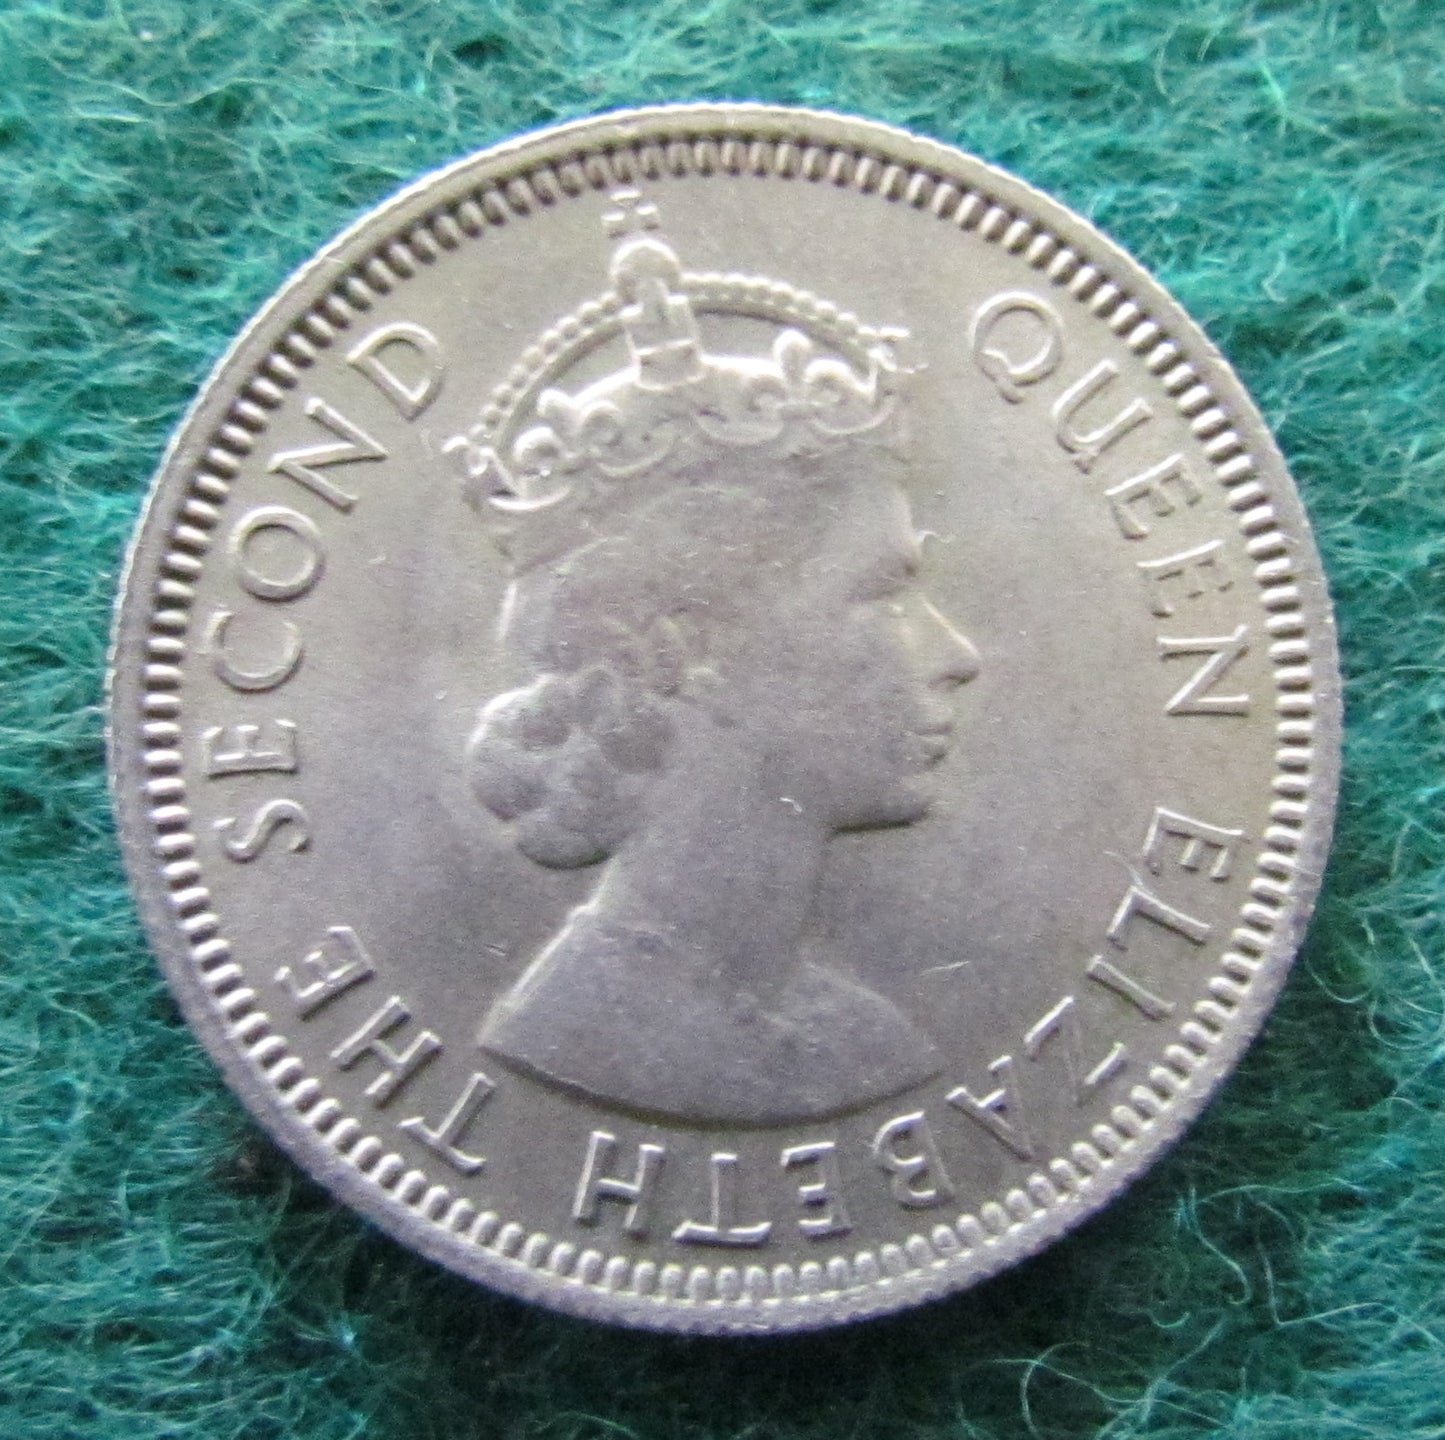 Fiji 1953 Sixpence Queen Elizabeth II Coin - Circulated